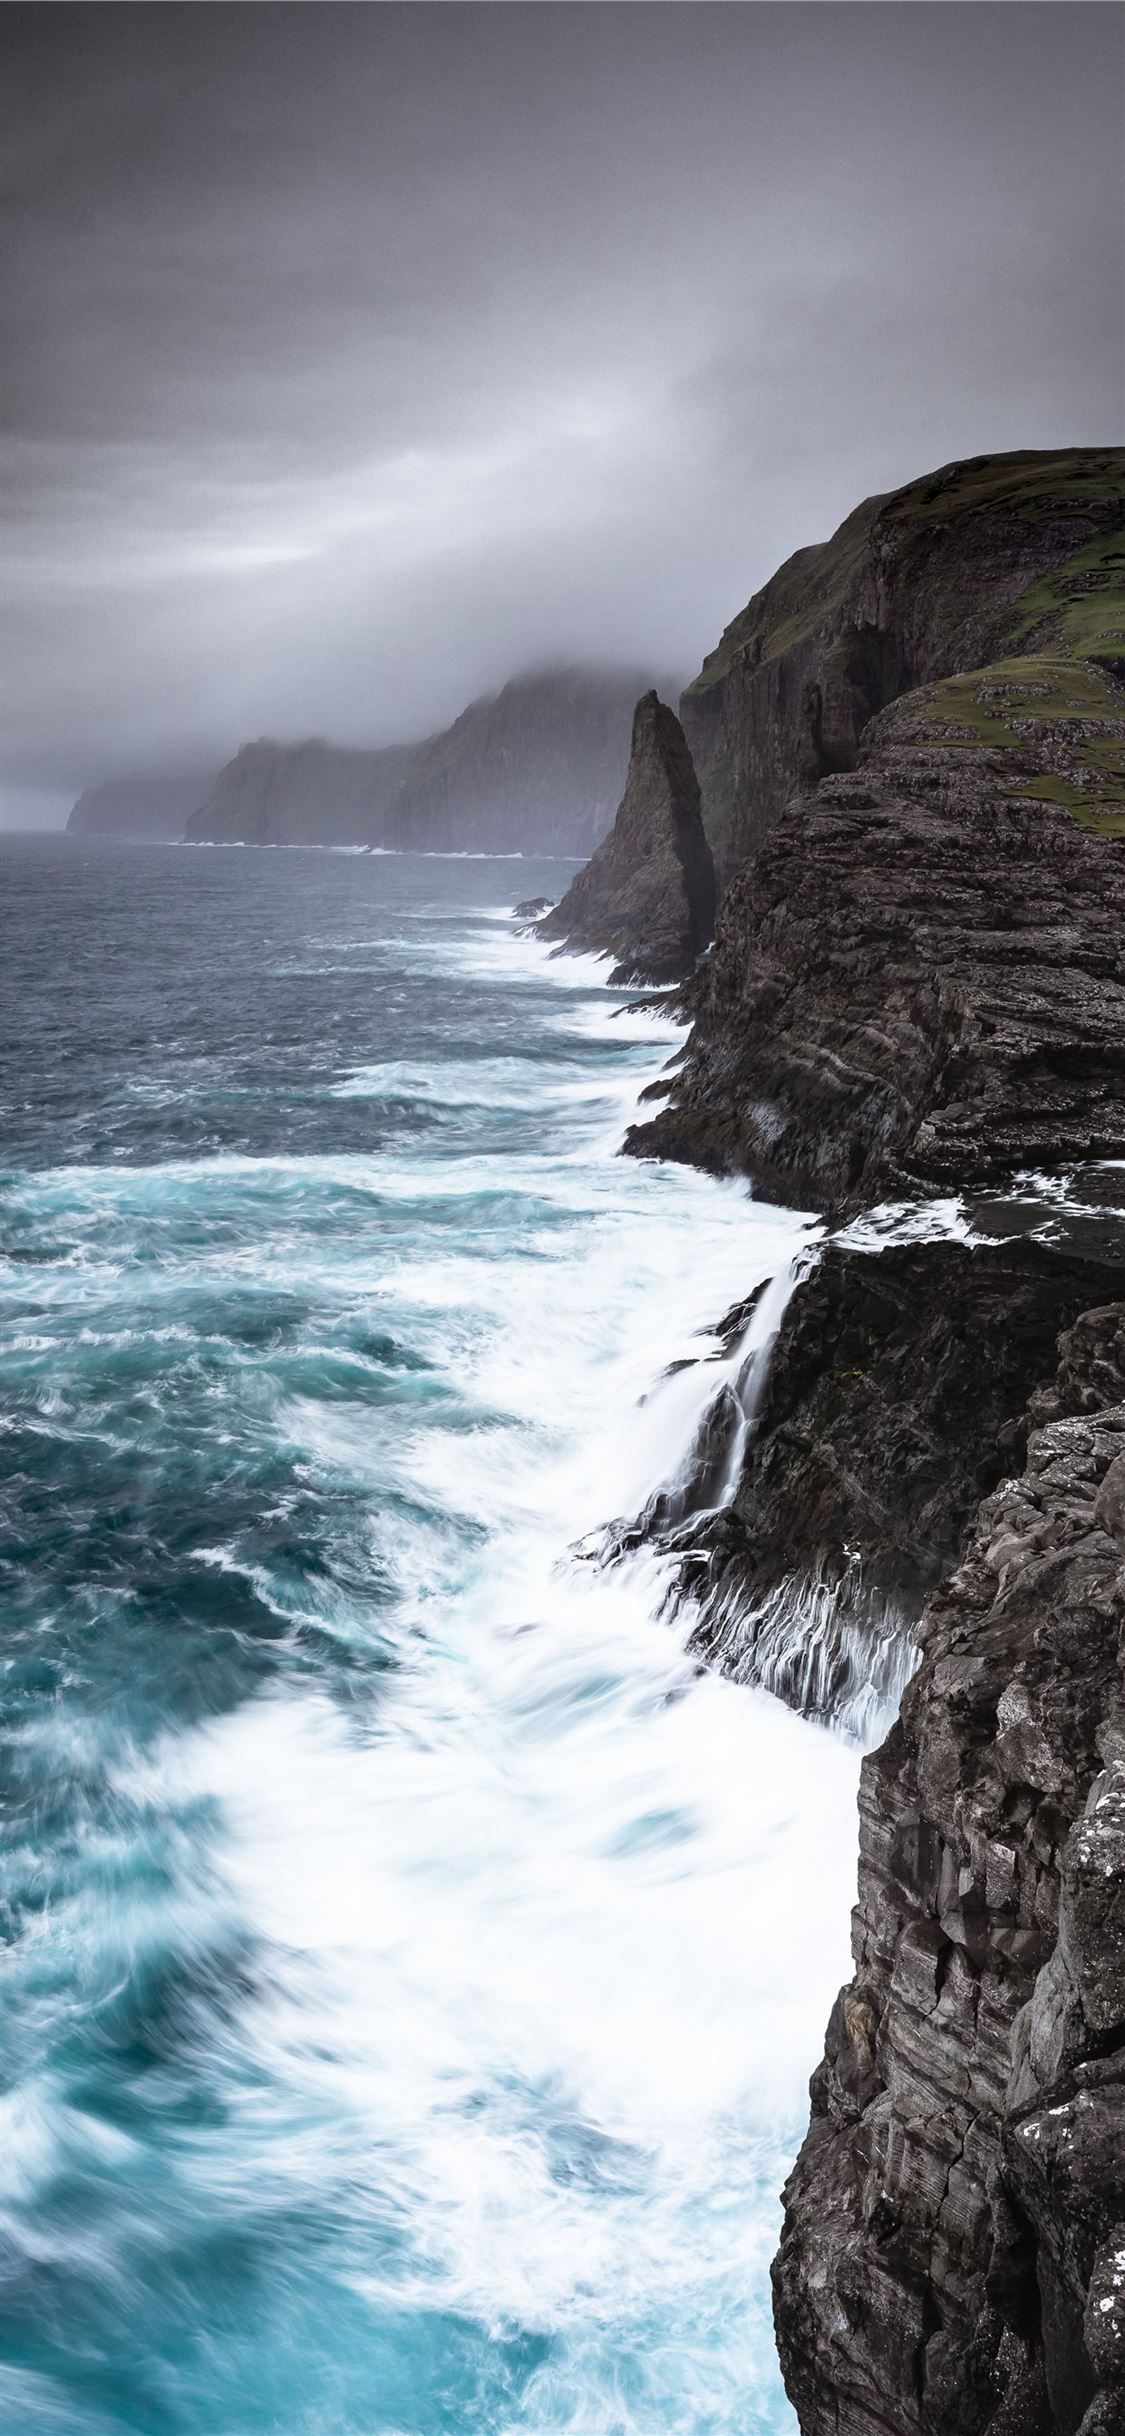 waves crashing sea cliffs digital wallpaper #nature #ocean #water #cave #grey #FaroeIslands #iP. iPhone wallpaper mountains, Digital wallpaper, Landscape picture